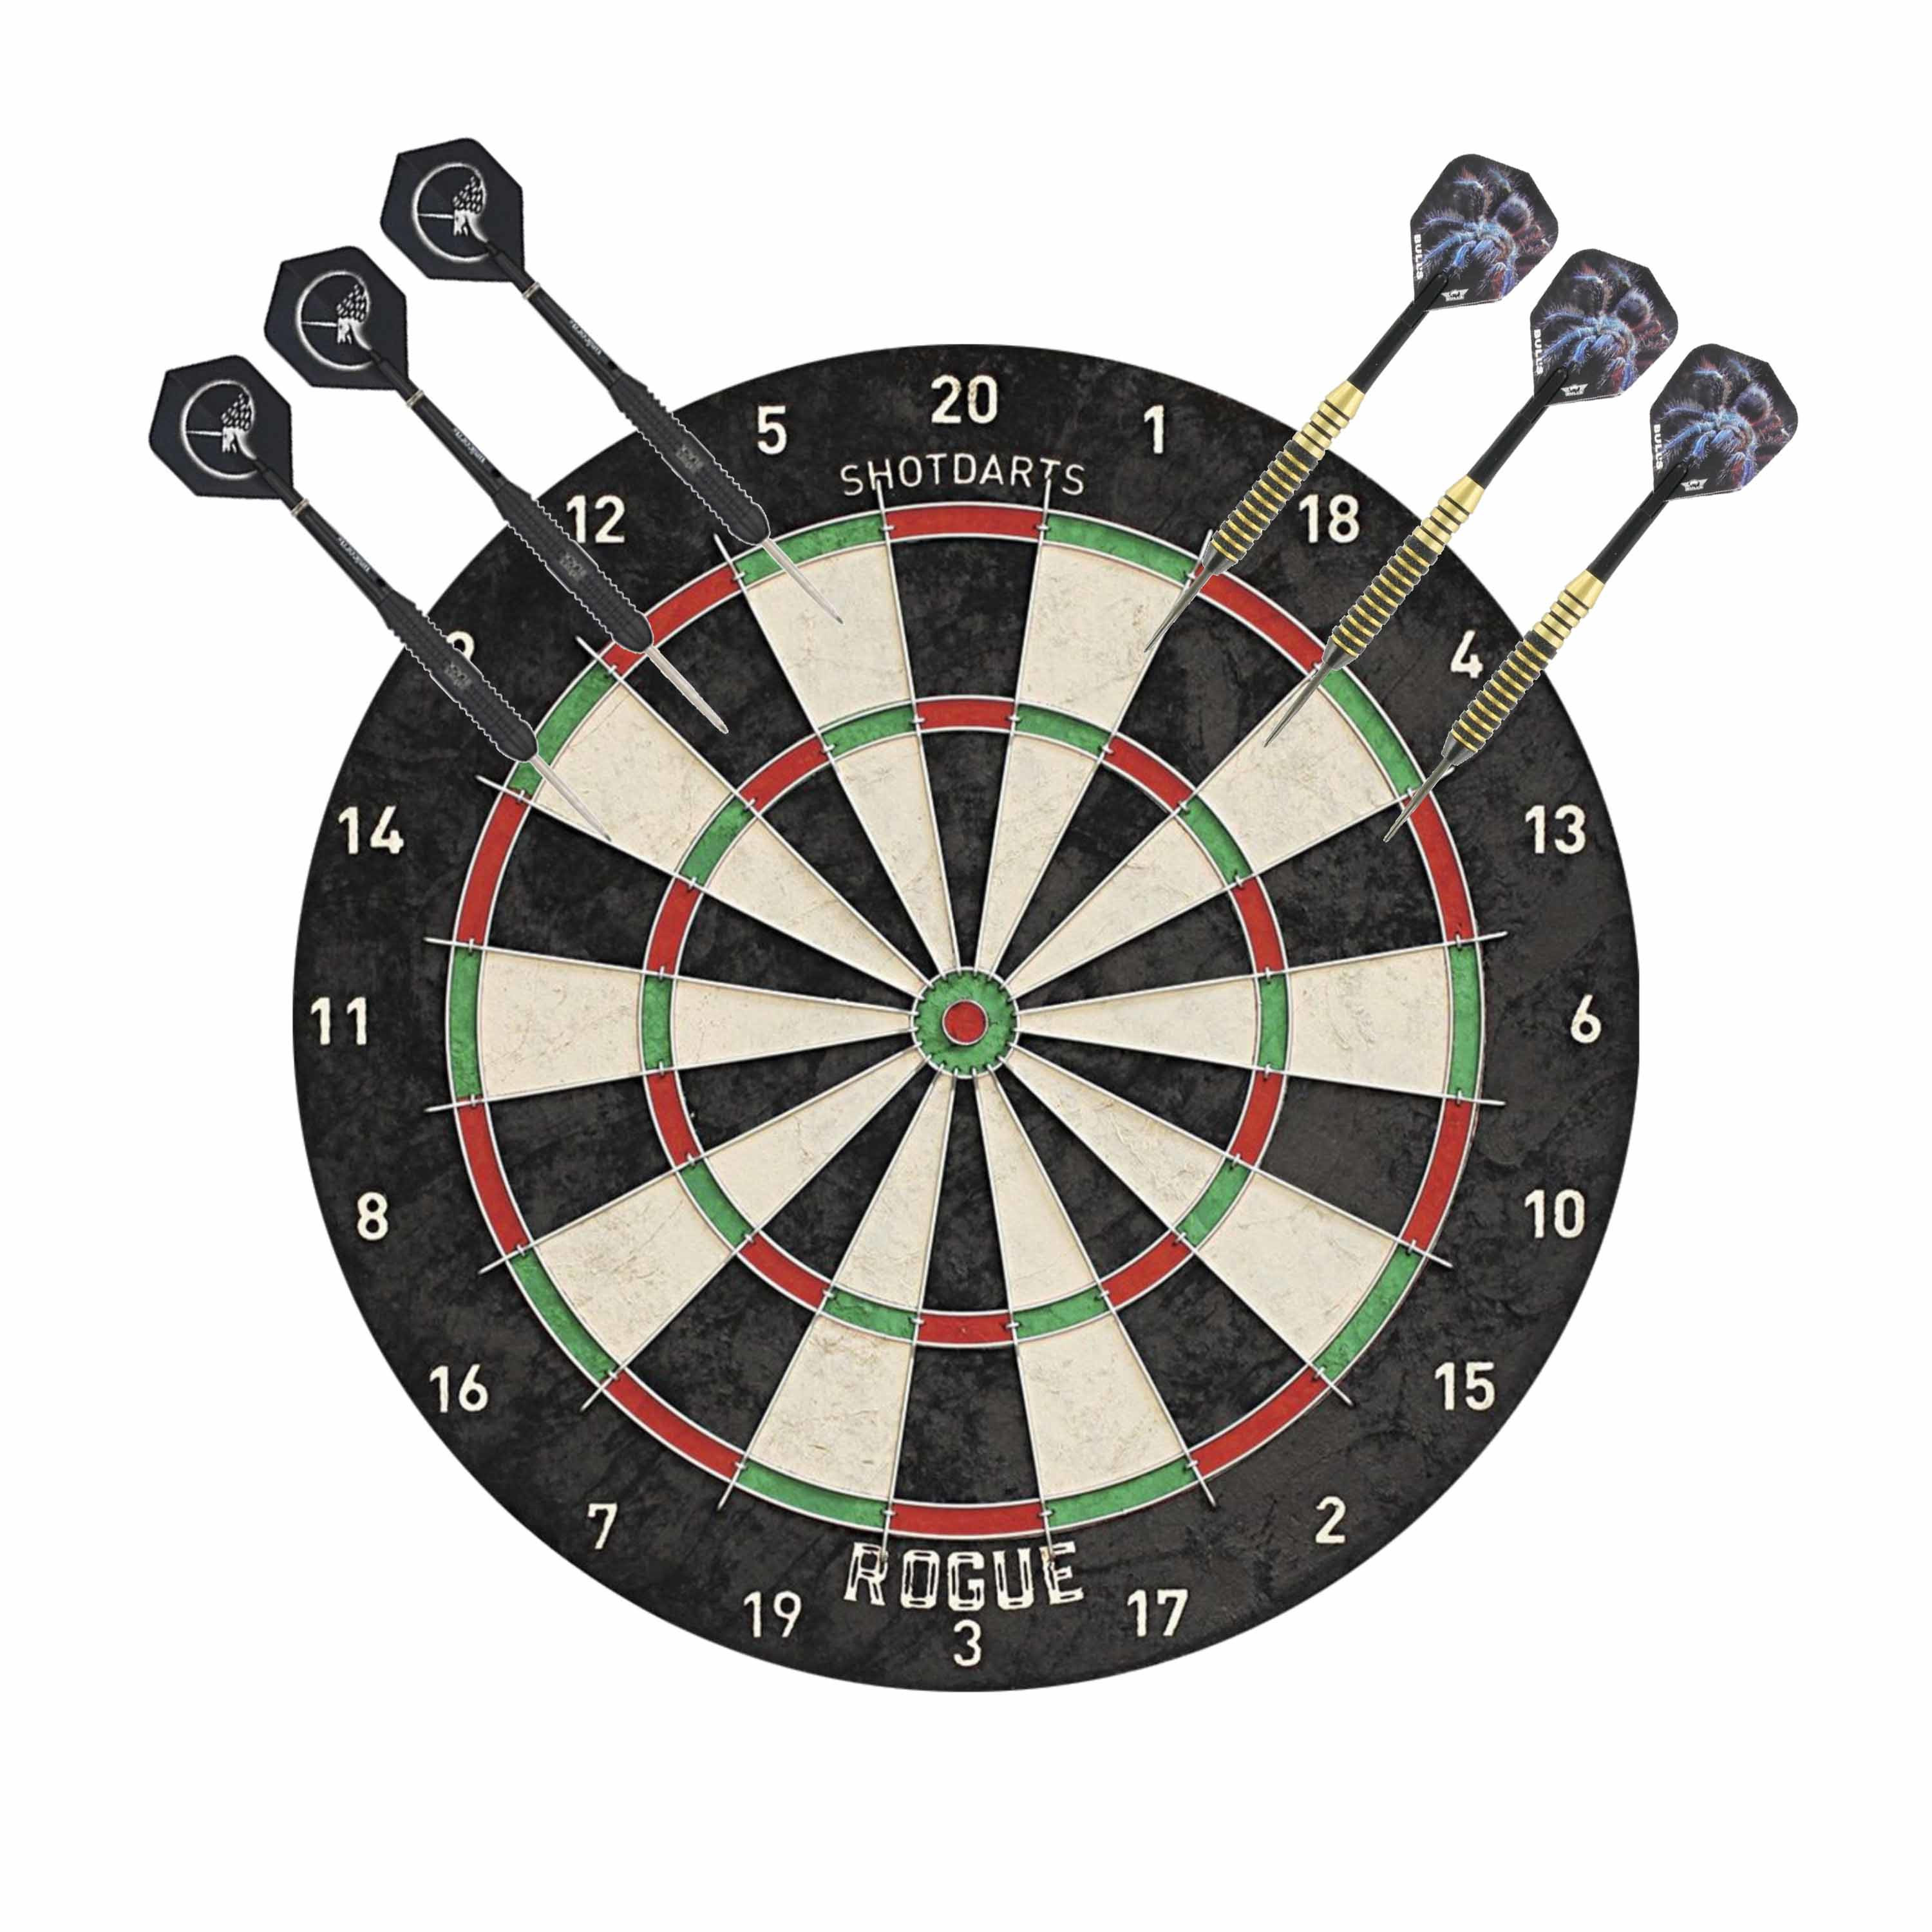 Bulls Classic dartbord set met 2 sets dartpijlen 22 grams